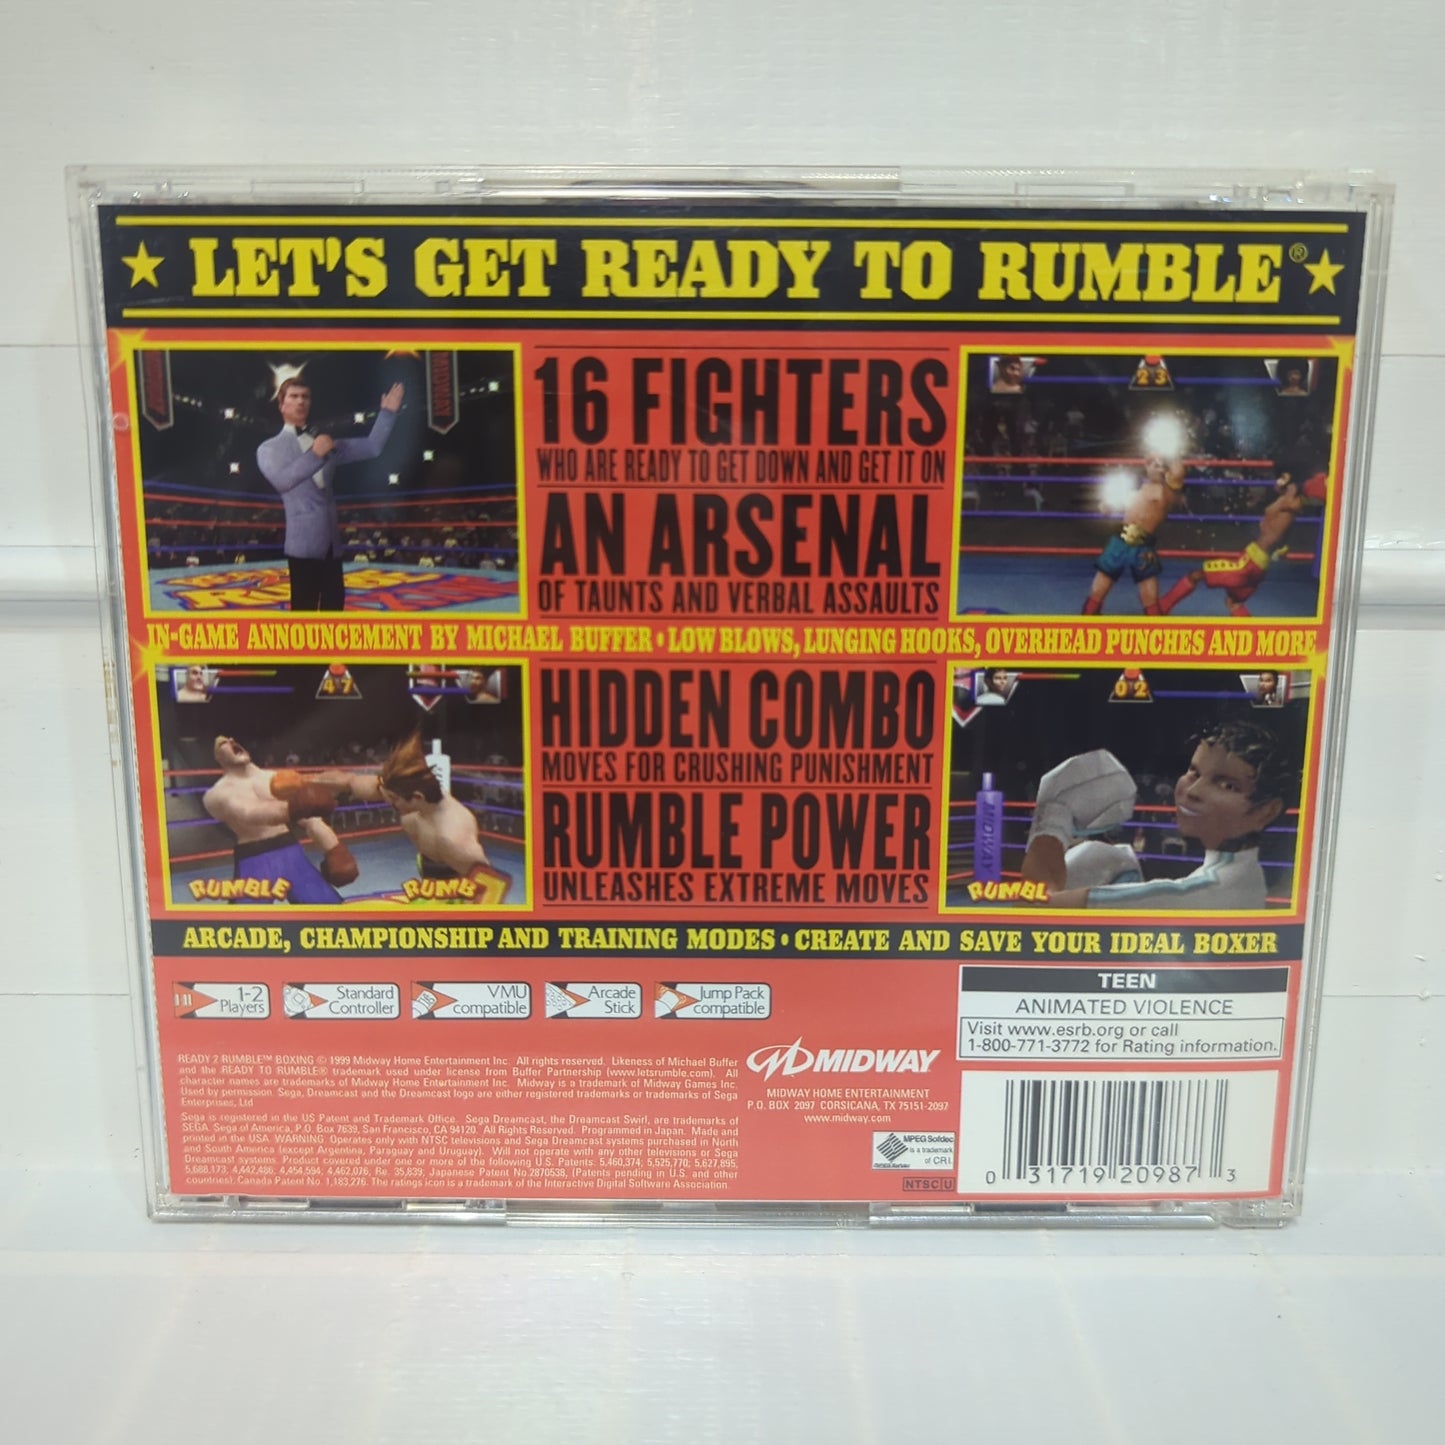 Ready 2 Rumble Boxing - Sega Dreamcast